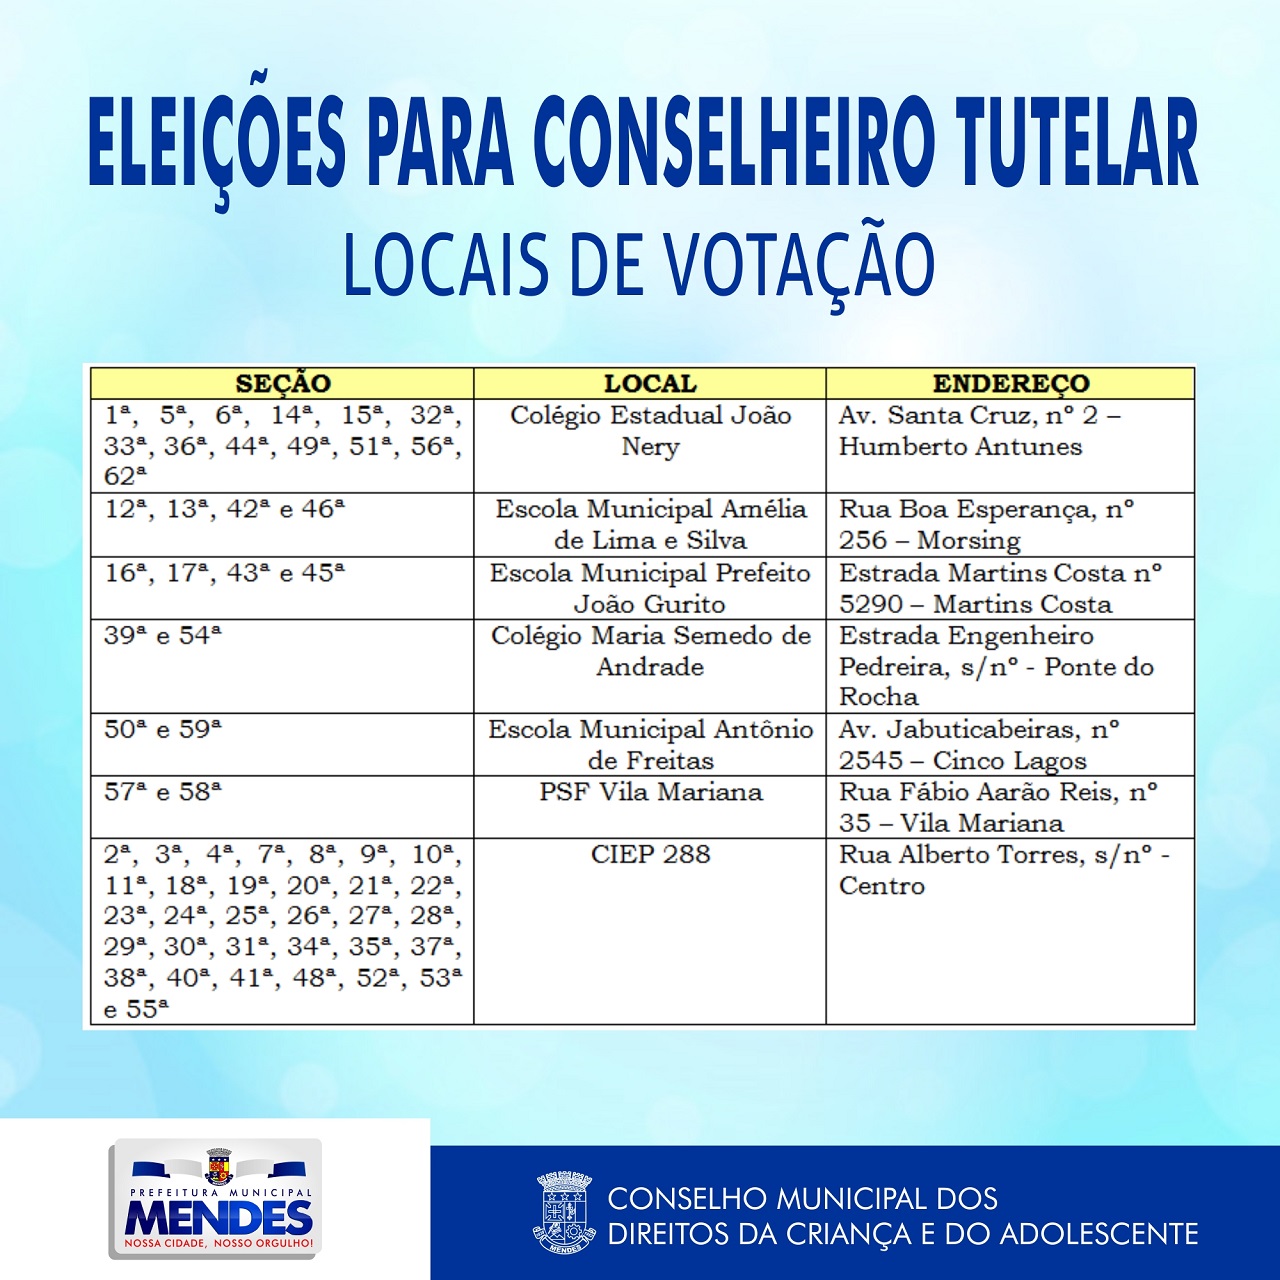 eleicao_conselheiros_tutelar_2019_2.jpg